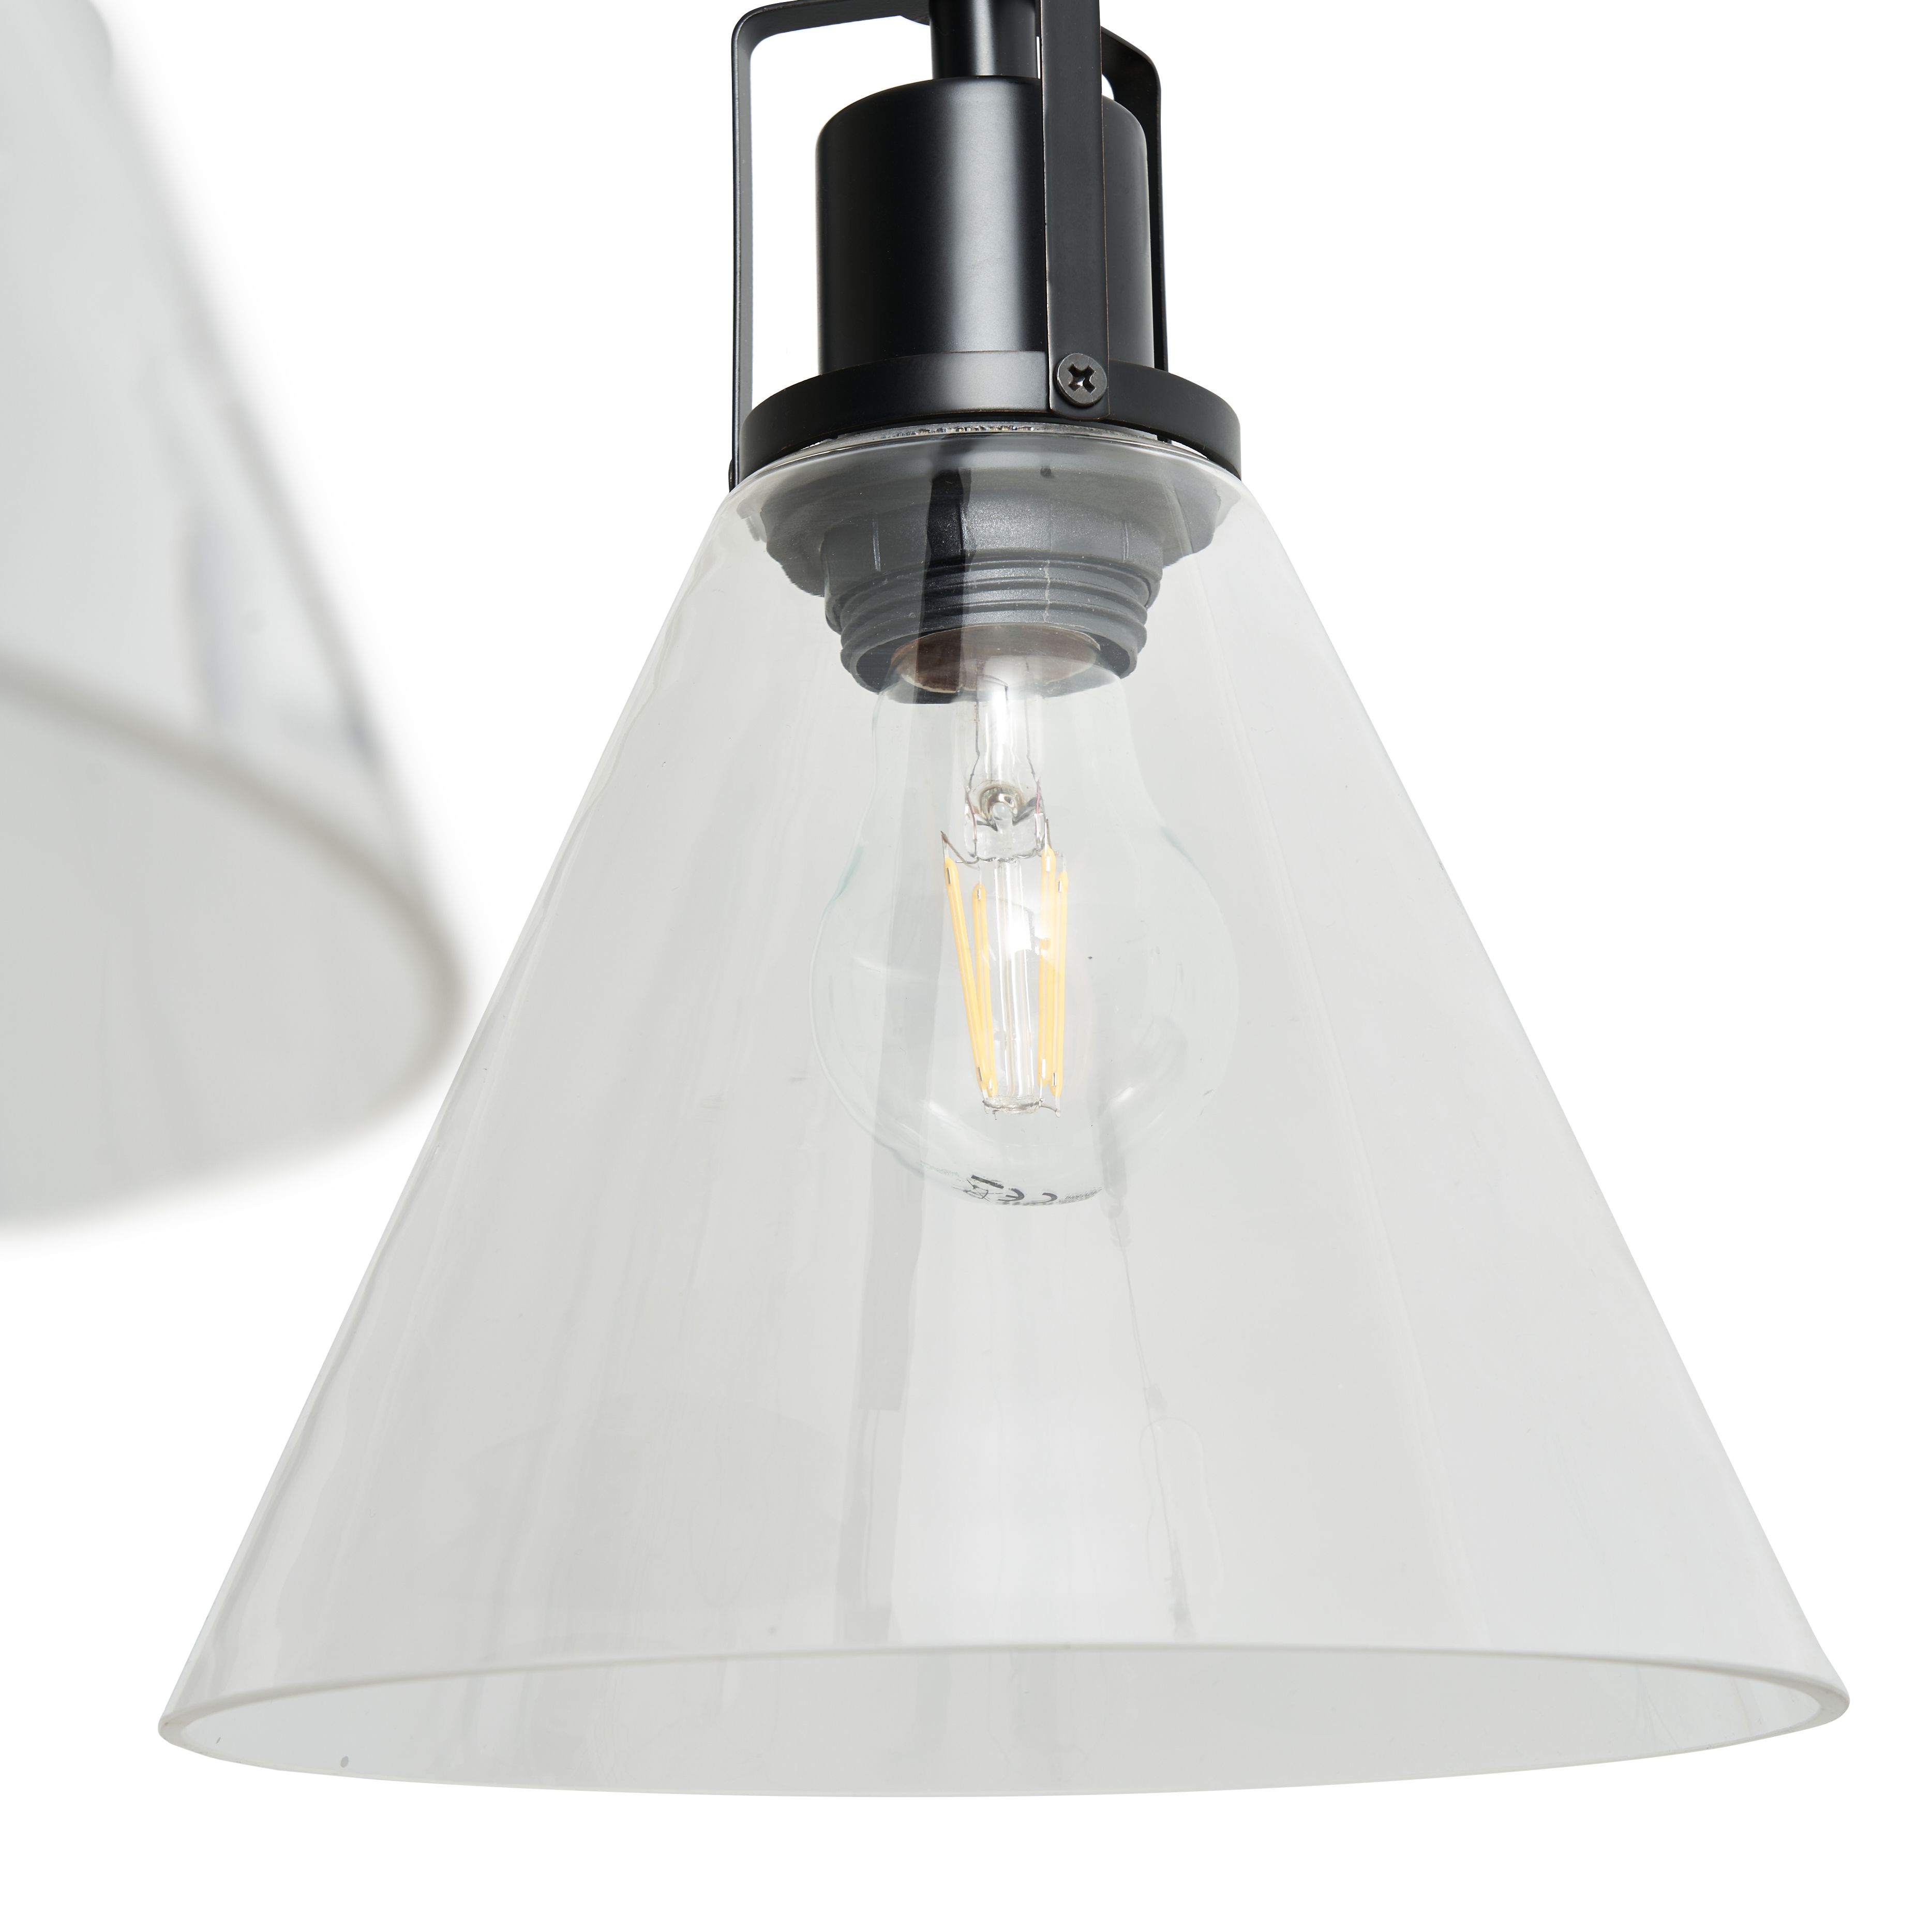 Inlight Dafyd pendant Matt Glass & metal 3 Lamp LED Ceiling light